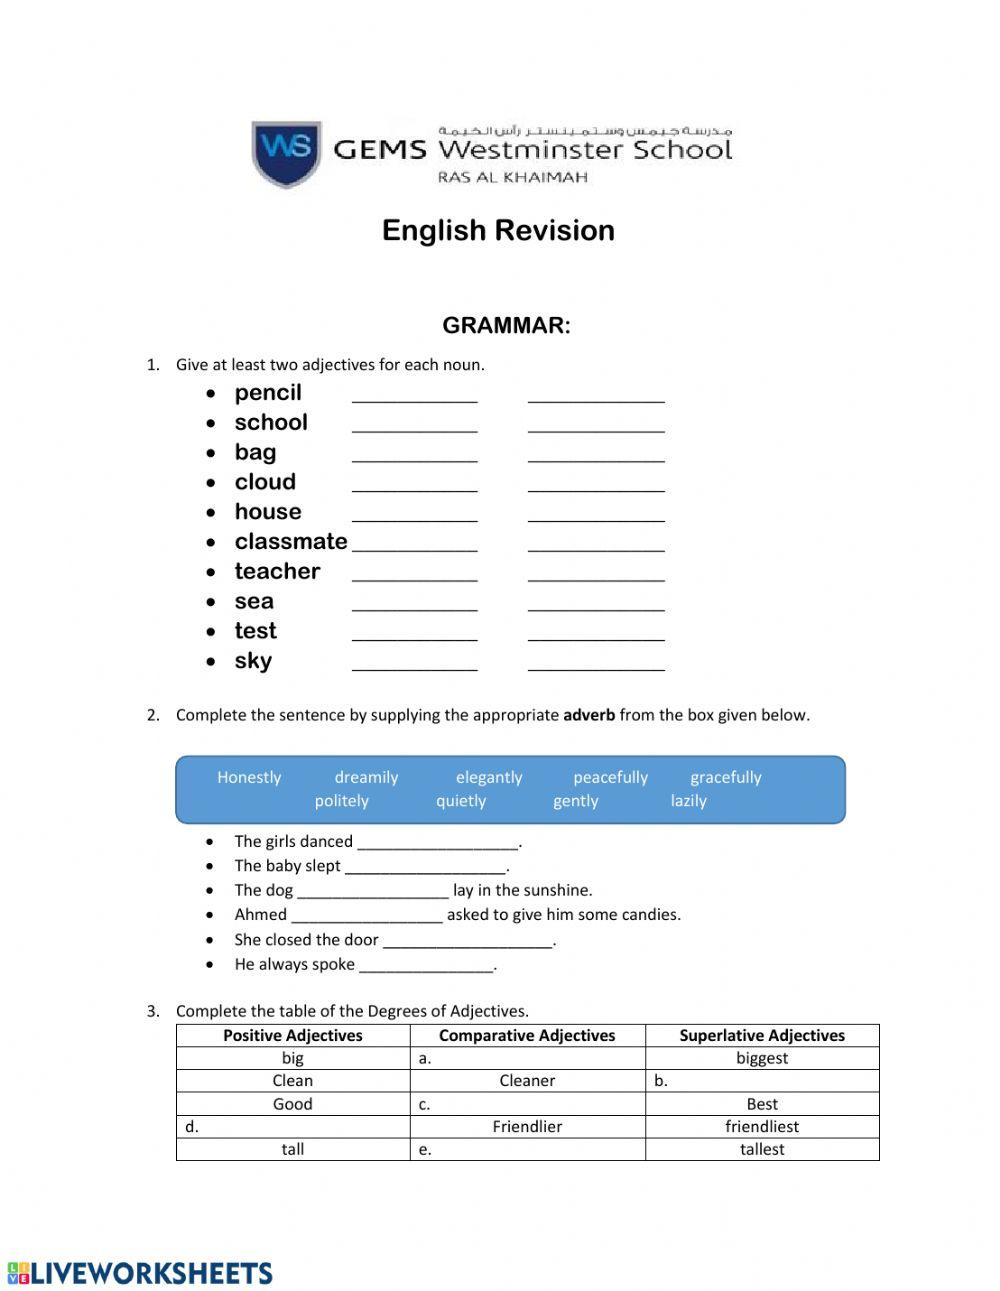 English Revision